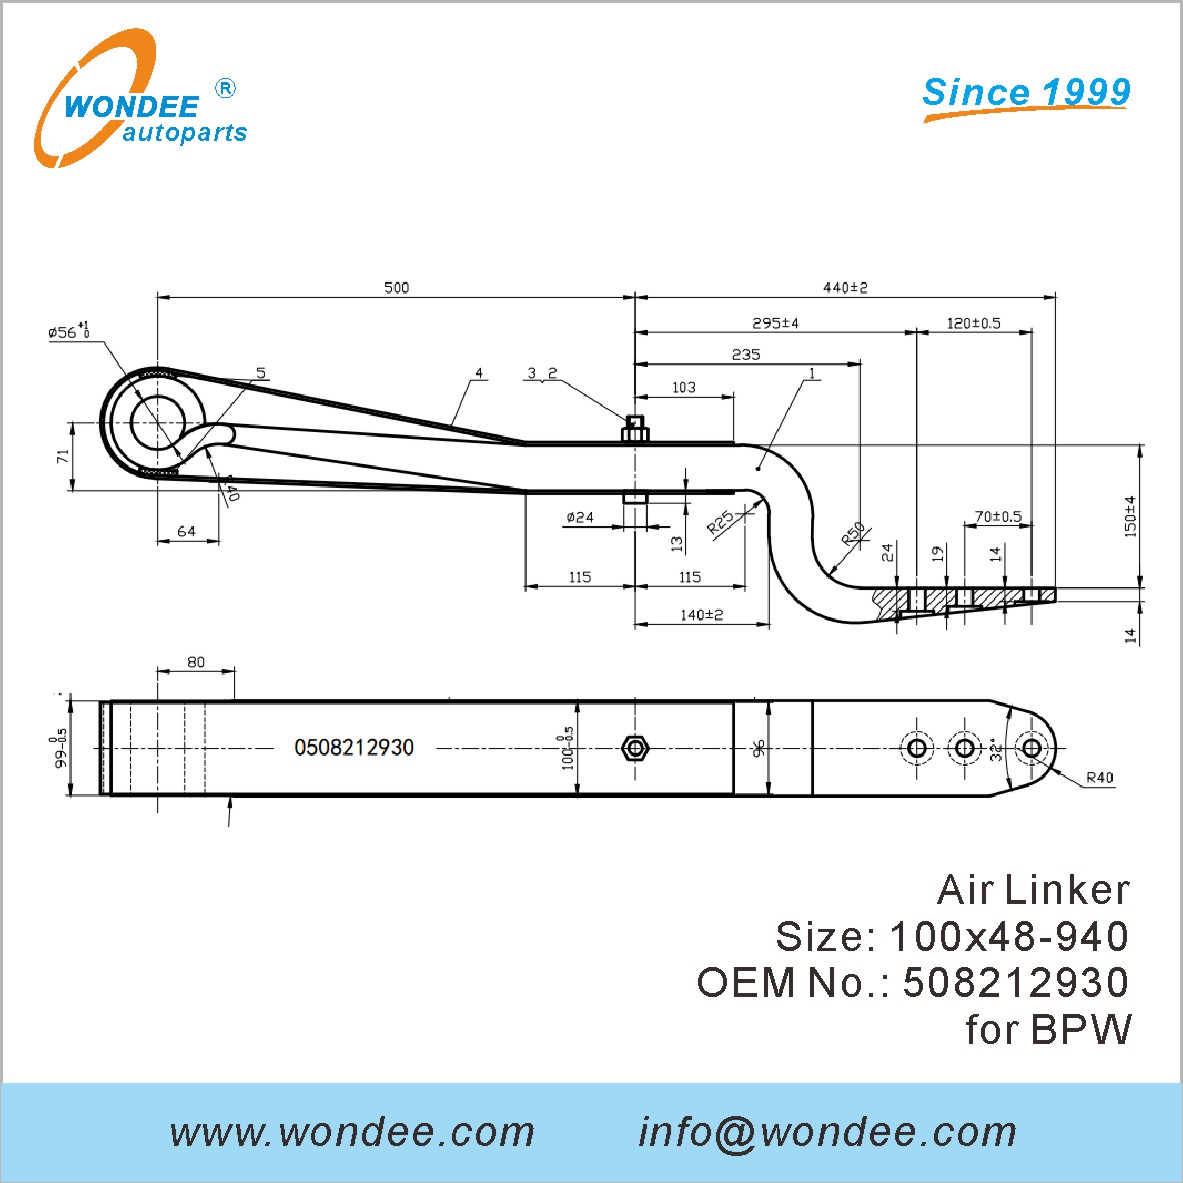 WONDEE Autoparts Air Linker OEM 508212930 for BPW